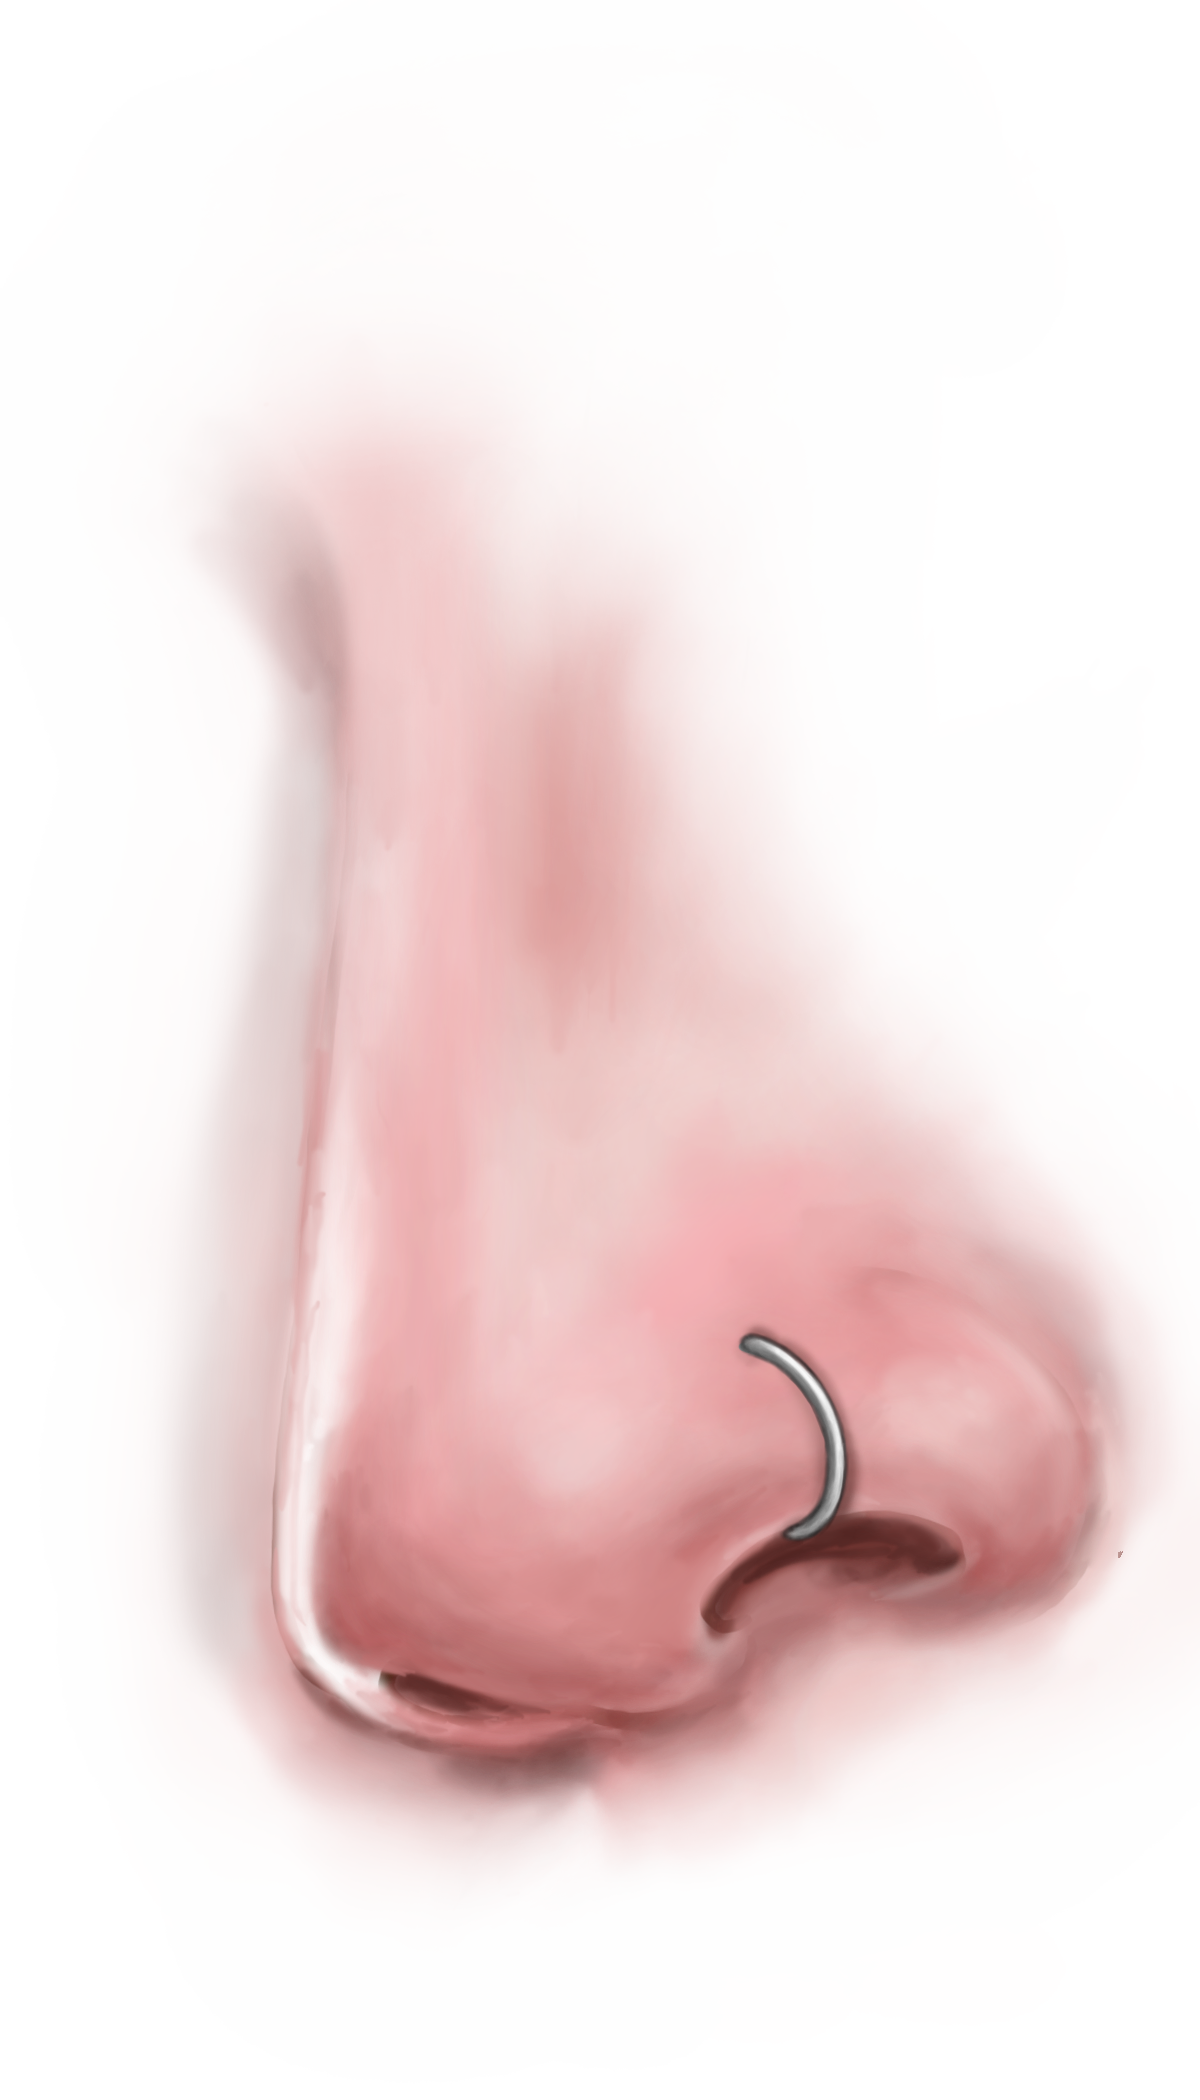 Nosewith Hoop Piercing